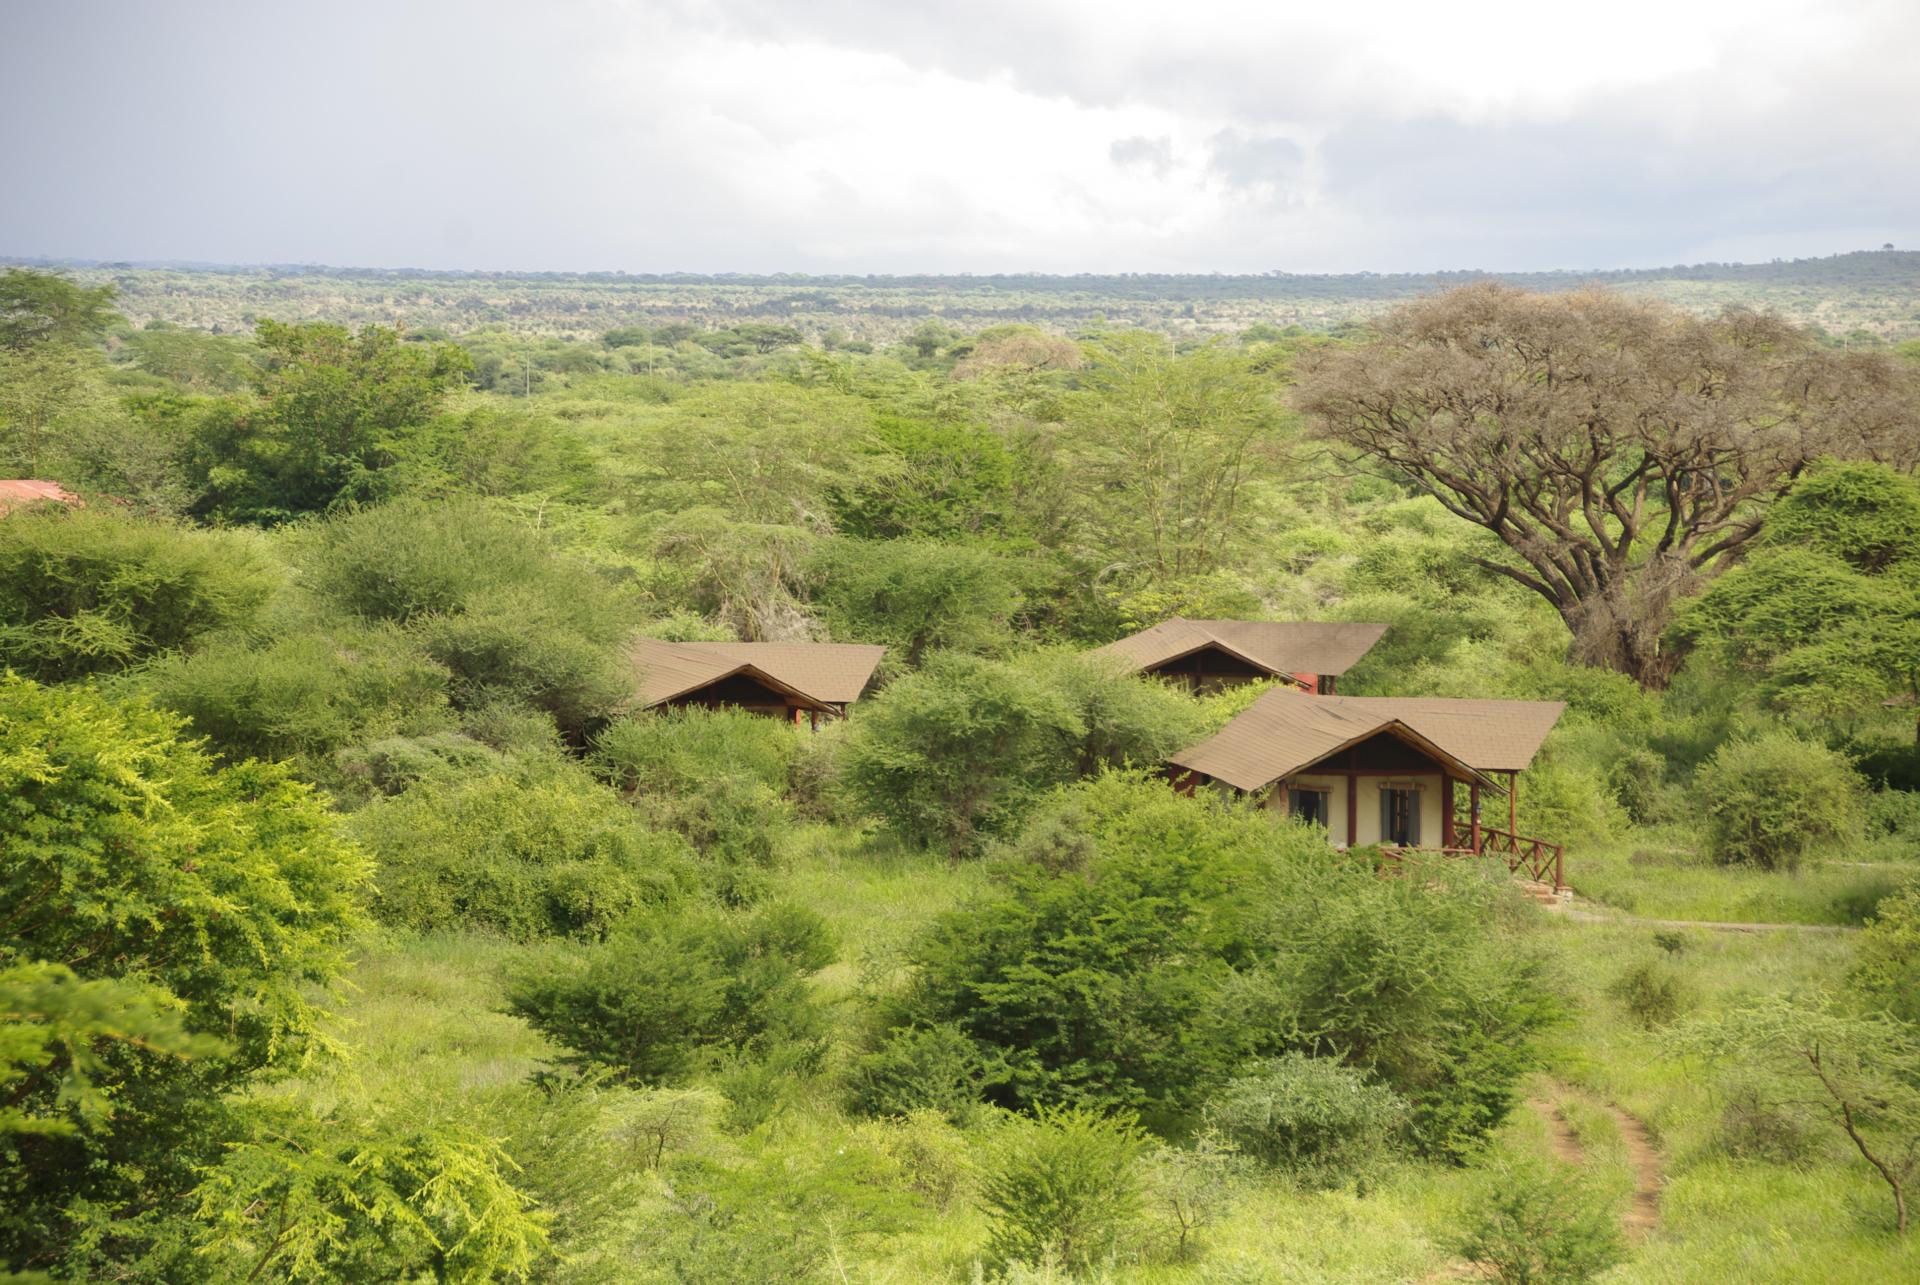 Kilima safari camp